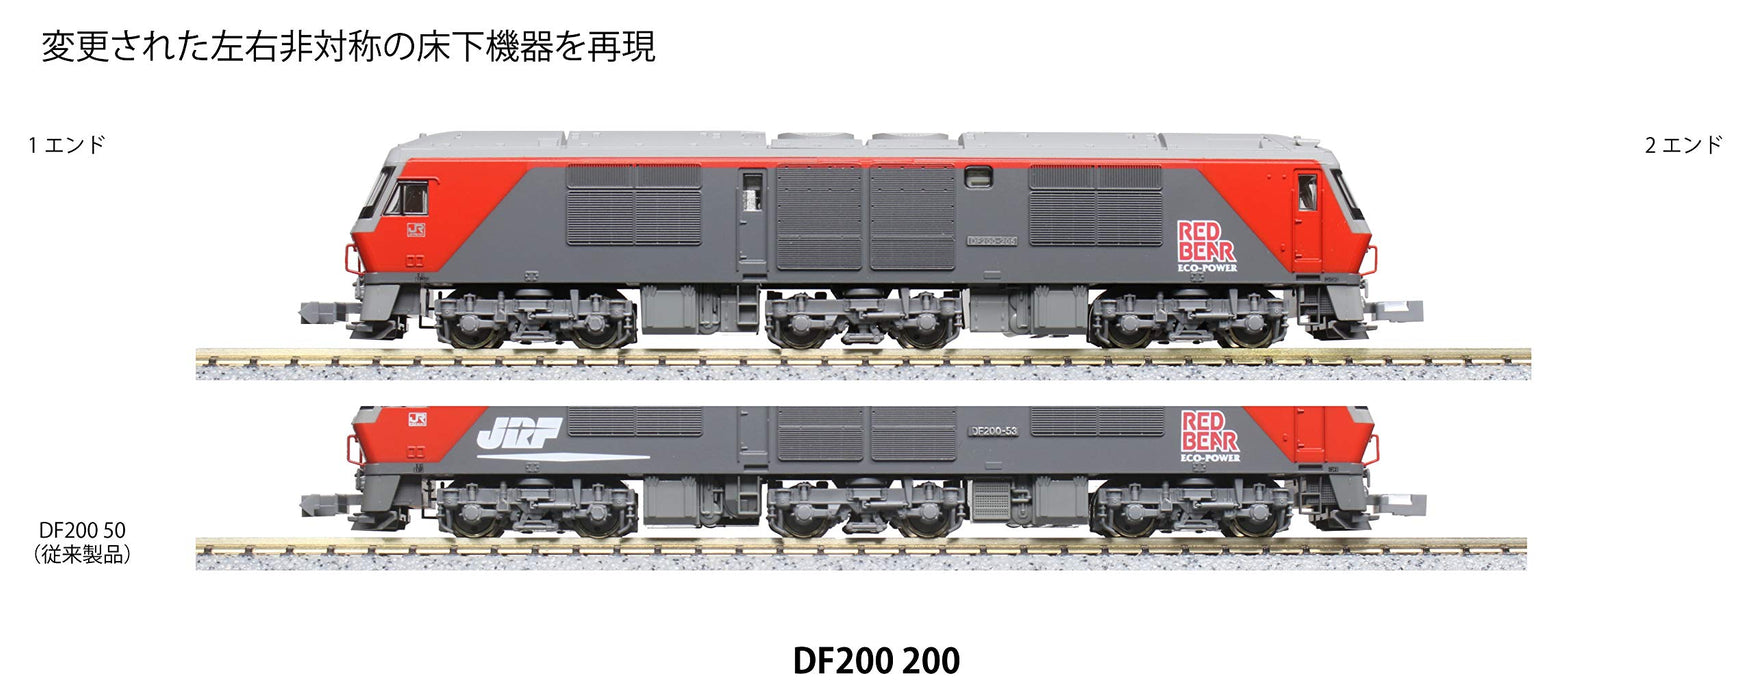 KATO N scale DF200 200 7007-5 Model railroad diesel locomotive 1/150 Plastic NEW_3